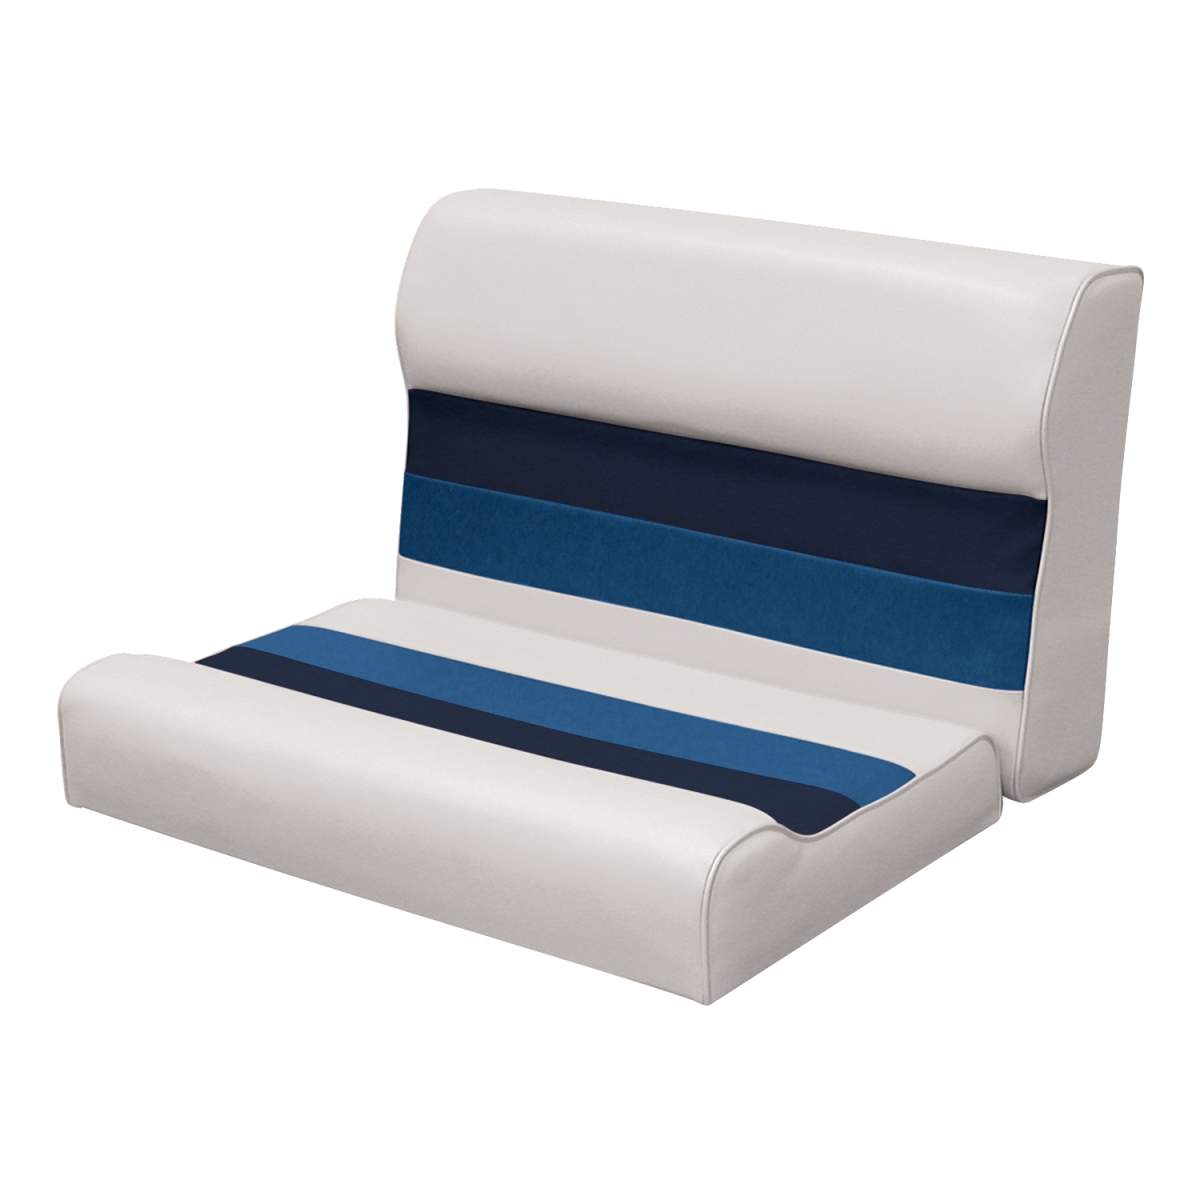 27 In. White, Navy & Blue Bench Seat